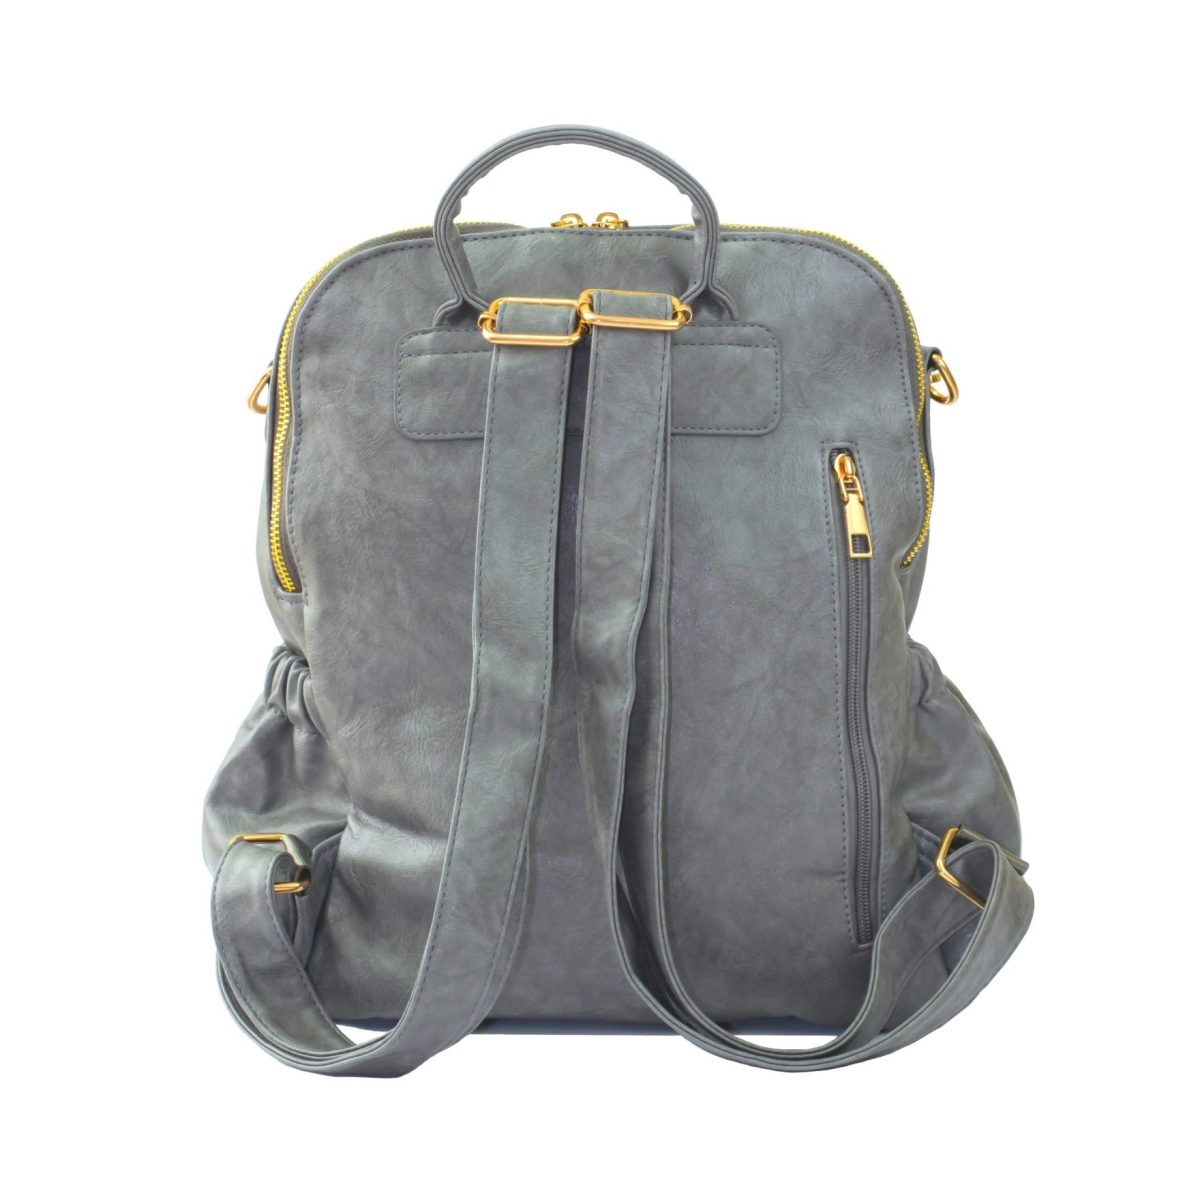 mochis bag gris con strap travel de diseñadora